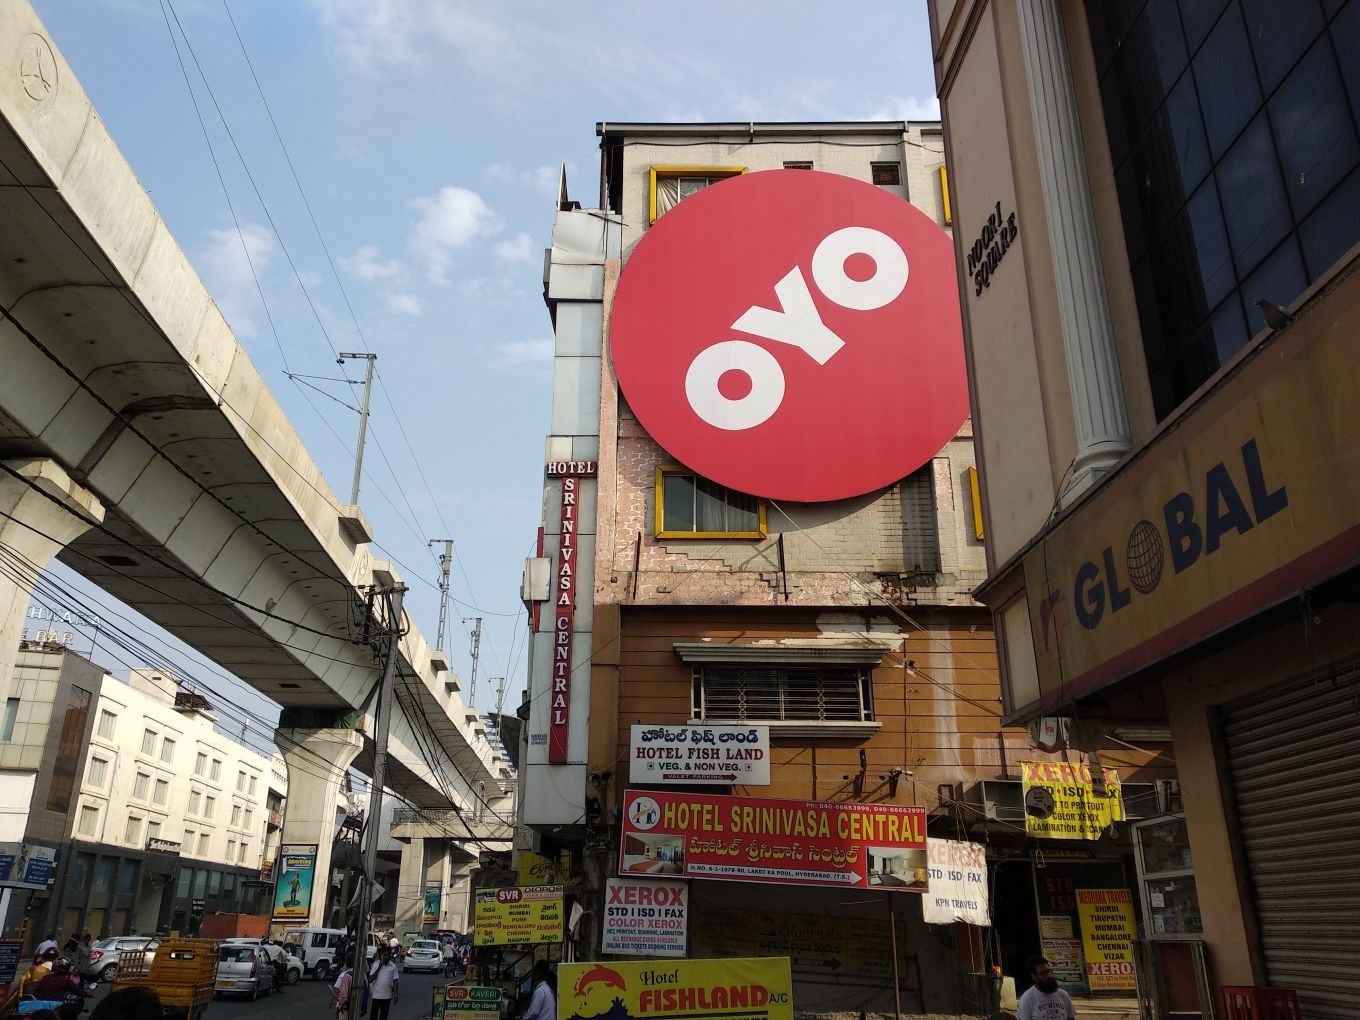 OYO Founder Ritesh Agarwal Looks To Buy Back $1.5 Bn Shares